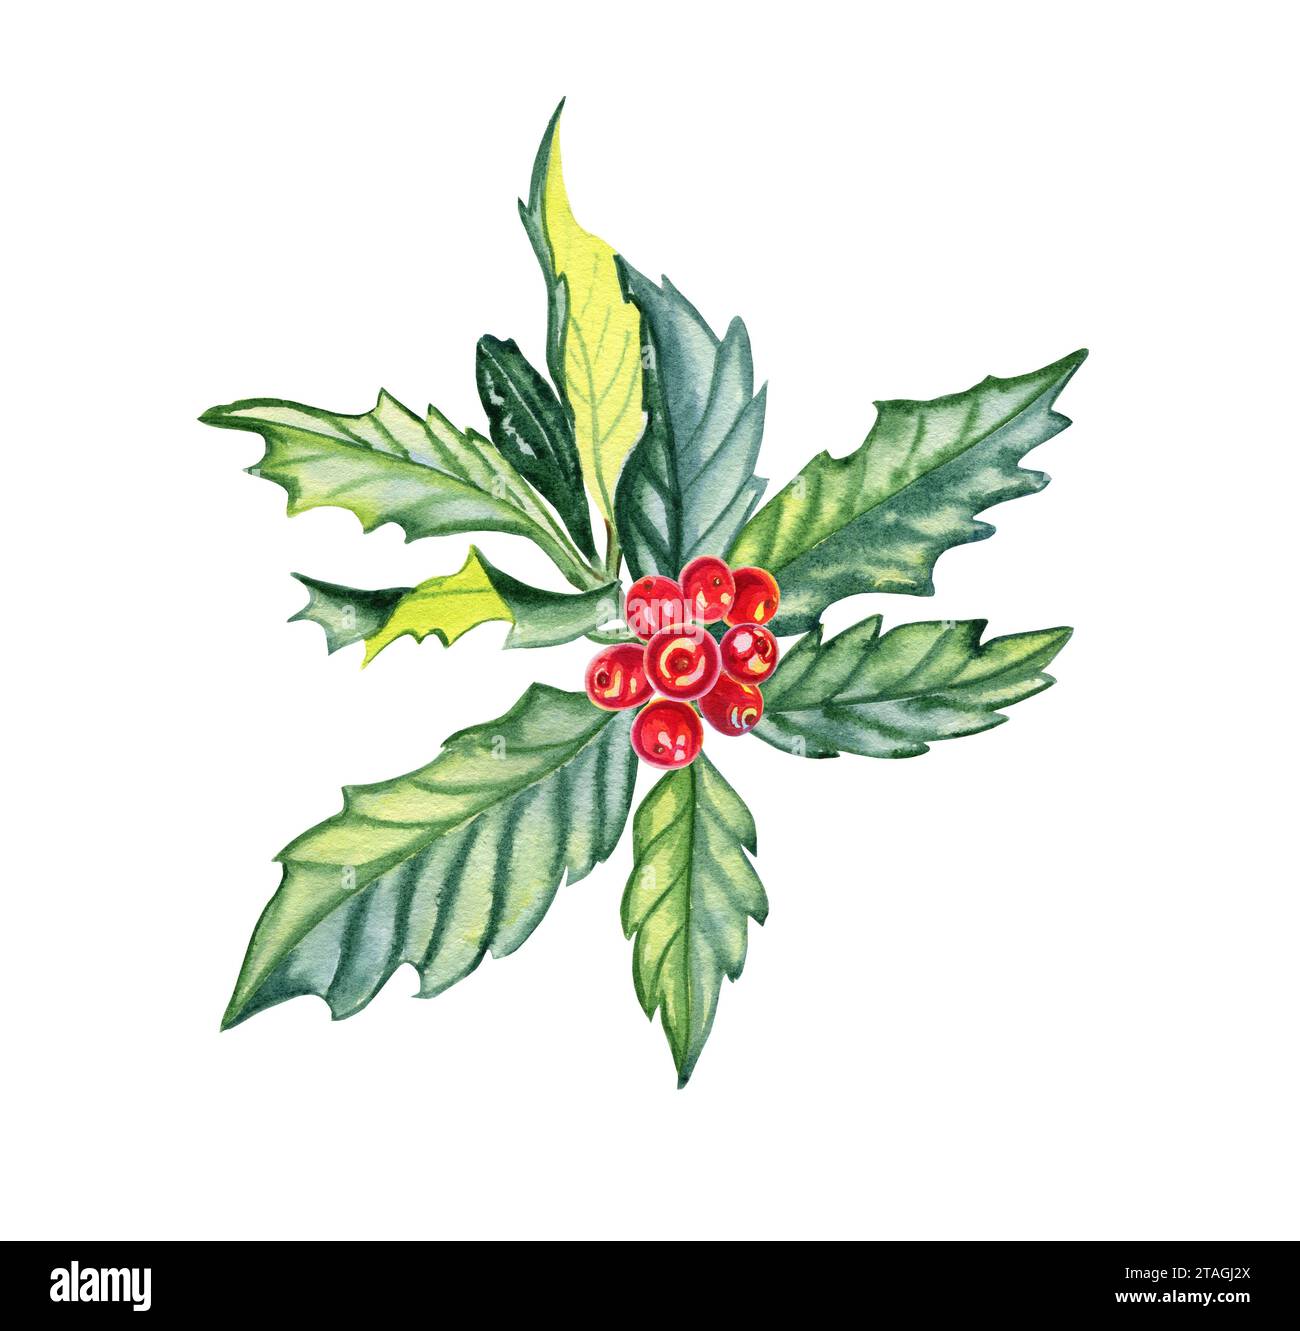 Pattern of Christmas sprigs of mistletoe on white background